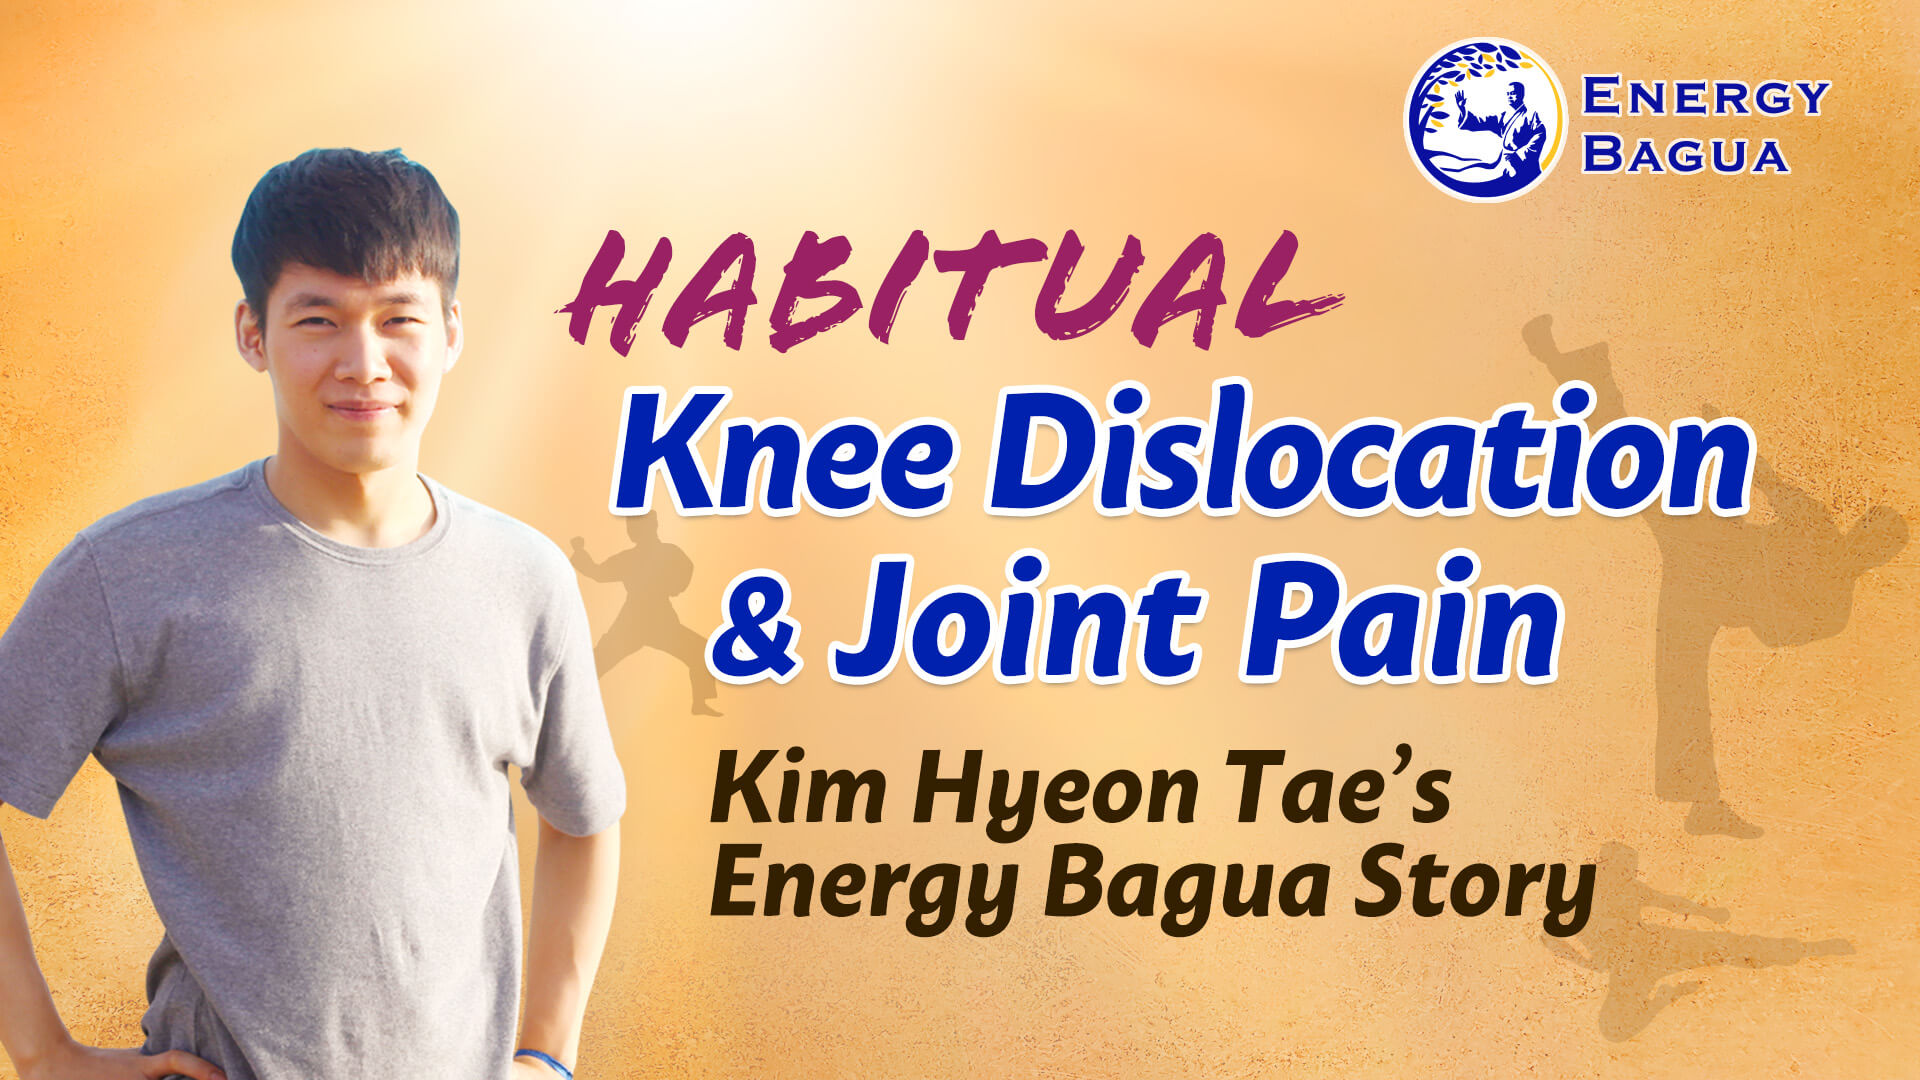 Habitual Knee Dislocation & Joint Pain